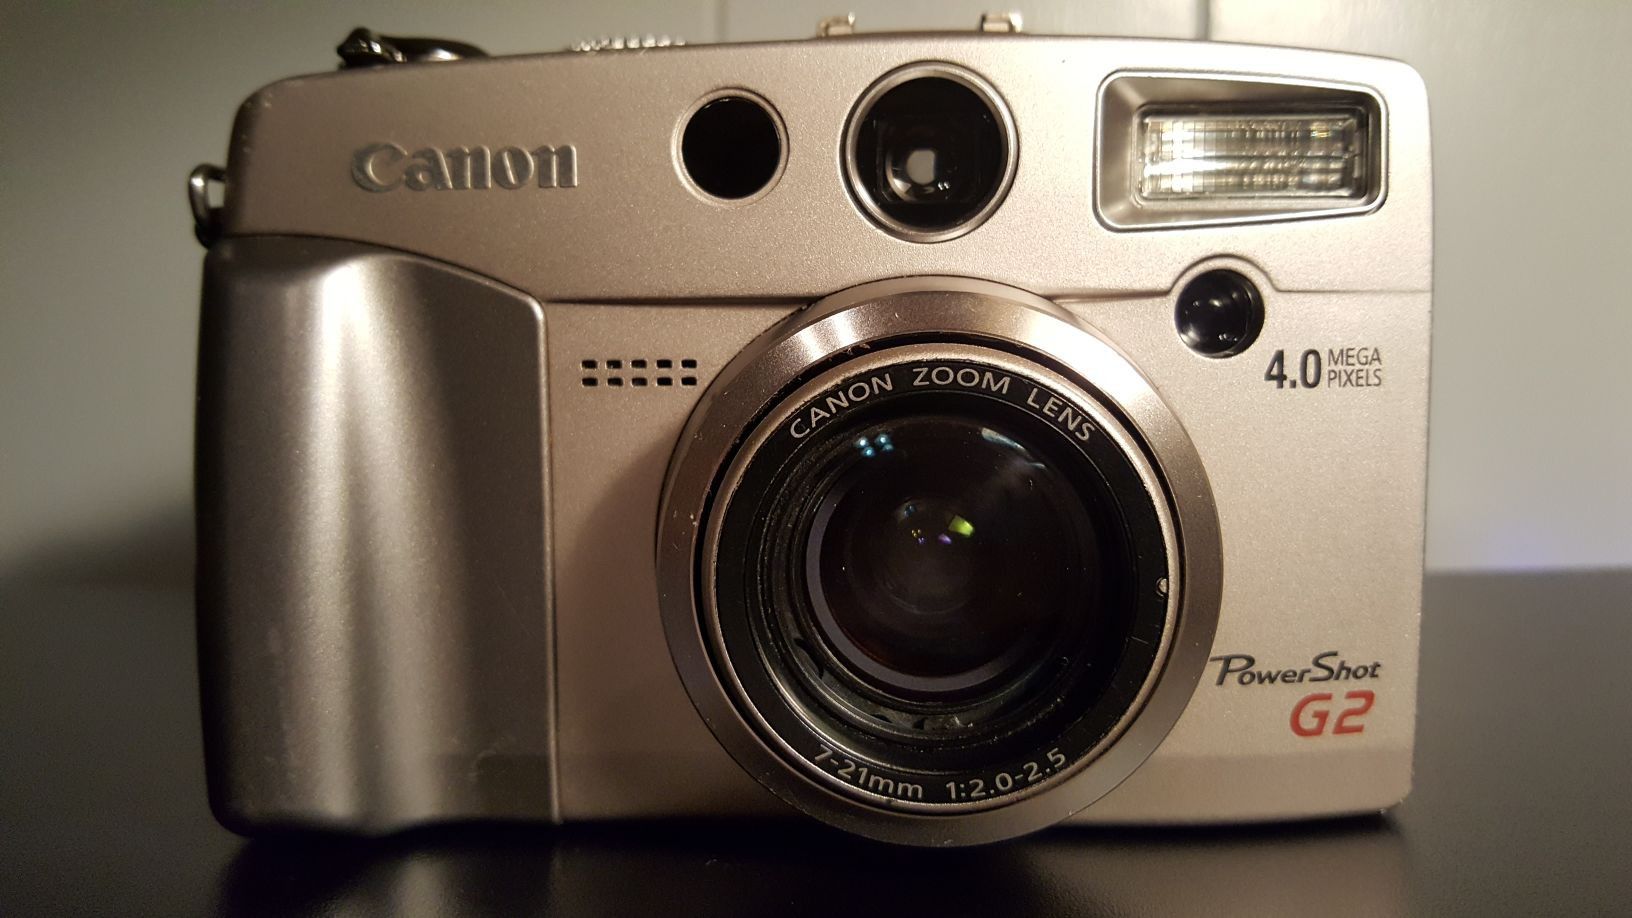 Canon Powershot G2 - Digital Camera